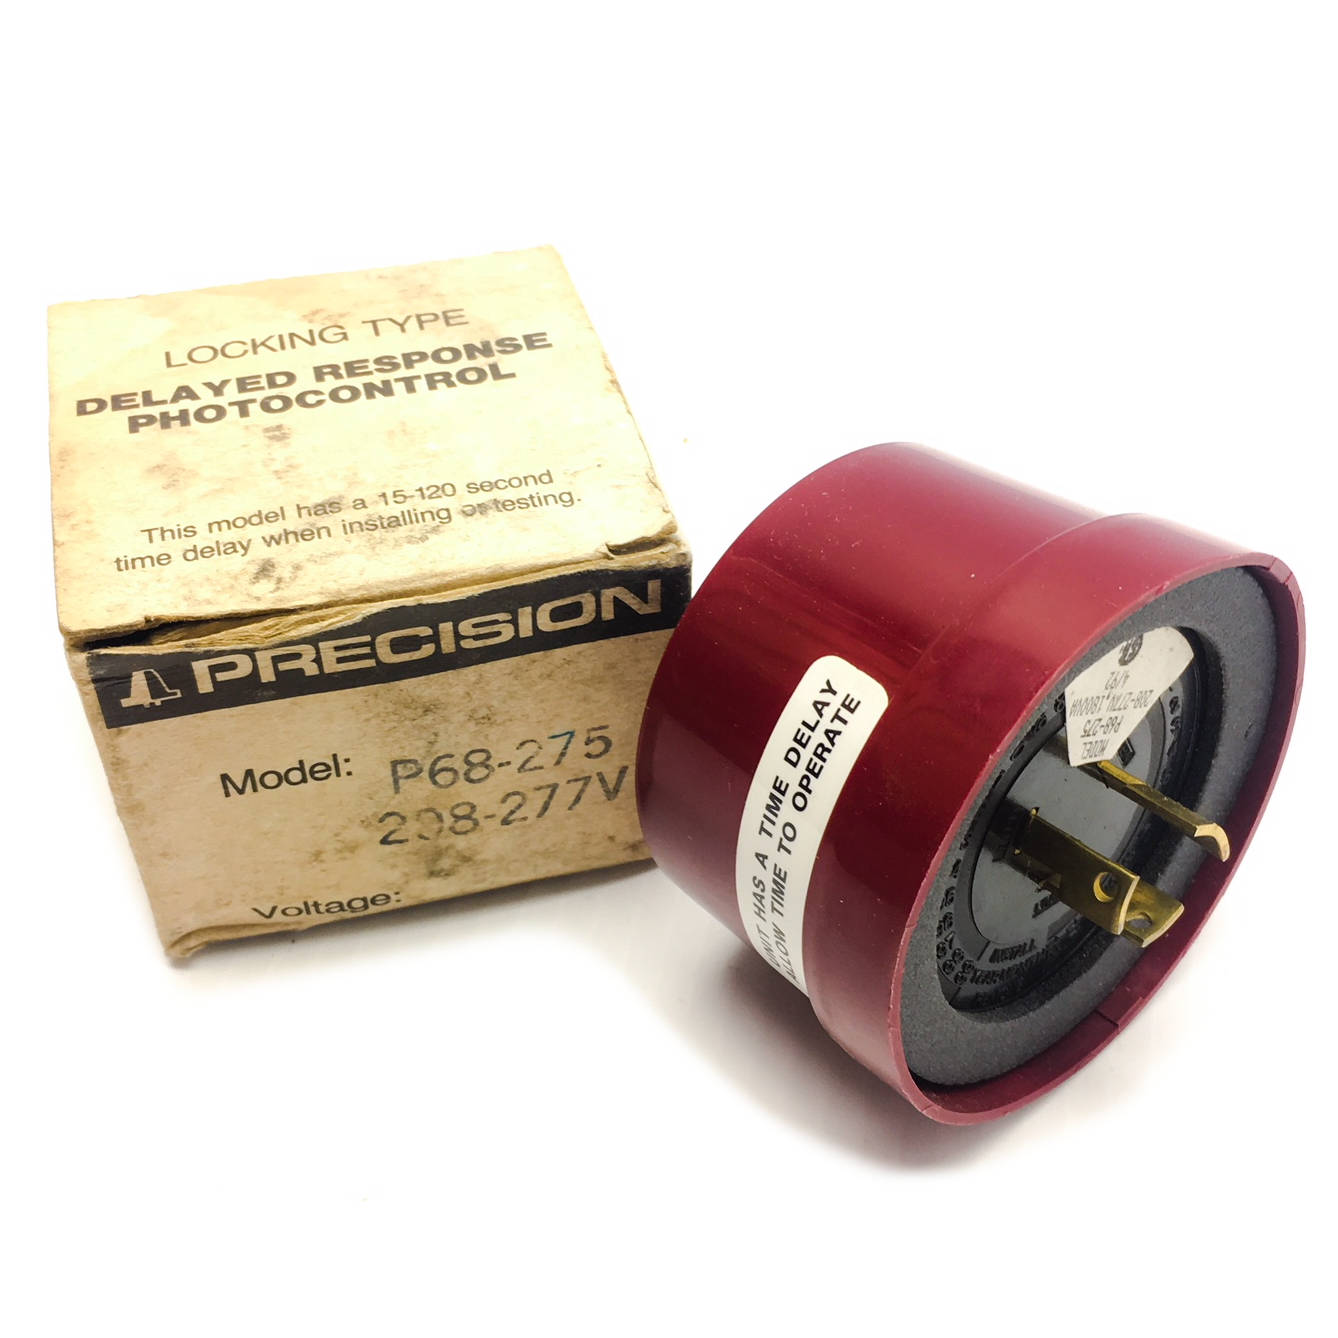 P68-275 Precision Photoelectric Lighting Control 3